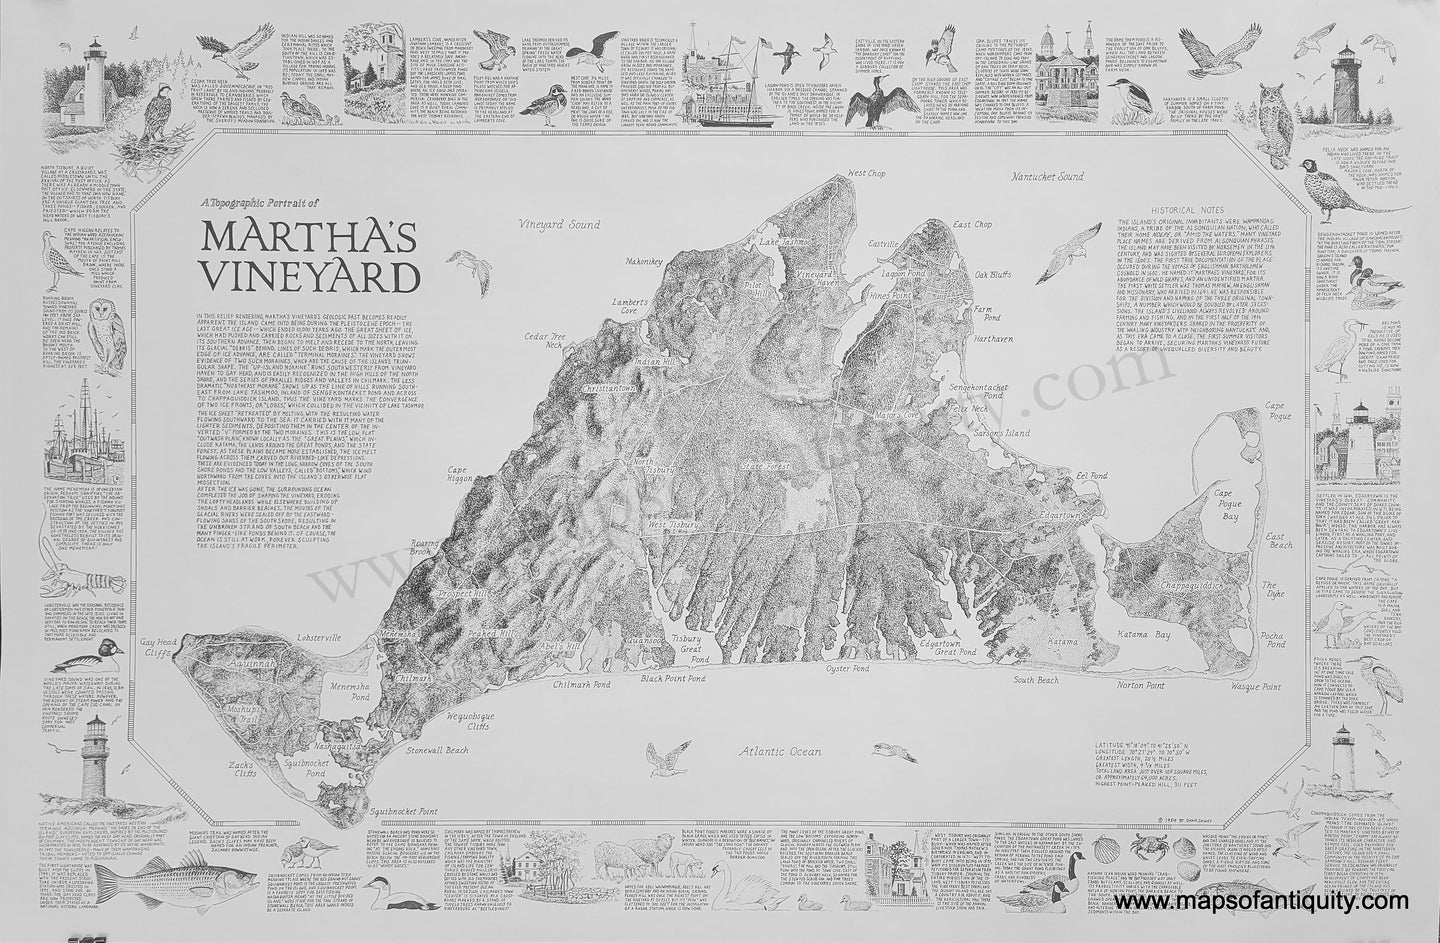 Modern-Printed-Map-A-Geographic-Portrait-of-Martha's-Vineyard-Massachusetts-US-Massachusetts-Cape-Cod-and-Islands-1985-Dana-Gaines-Maps-Of-Antiquity